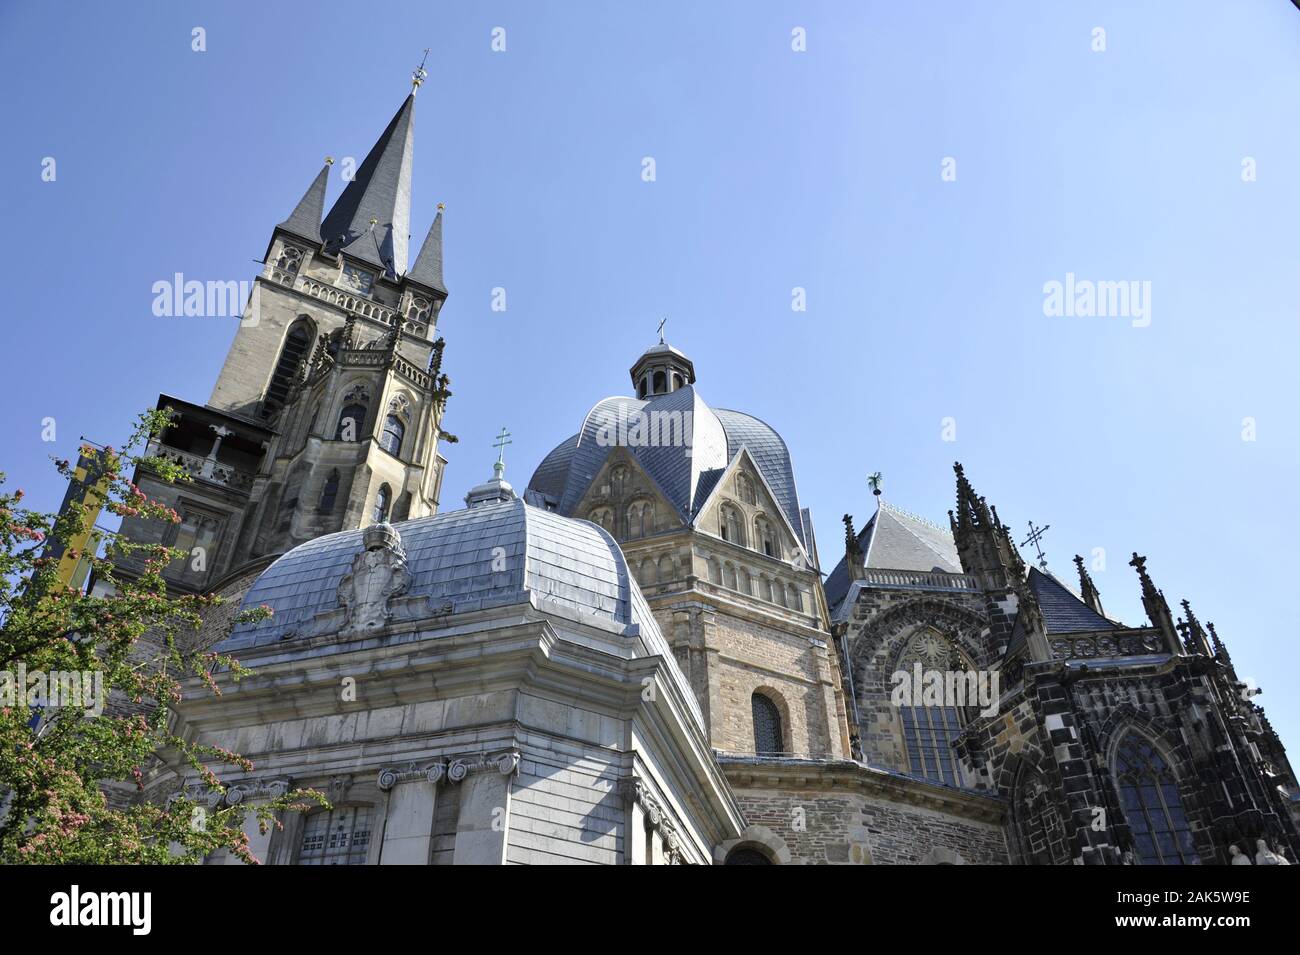 Aachen: Aussenansicht des Aachener Doms, Eifel | uso en todo el mundo Foto de stock